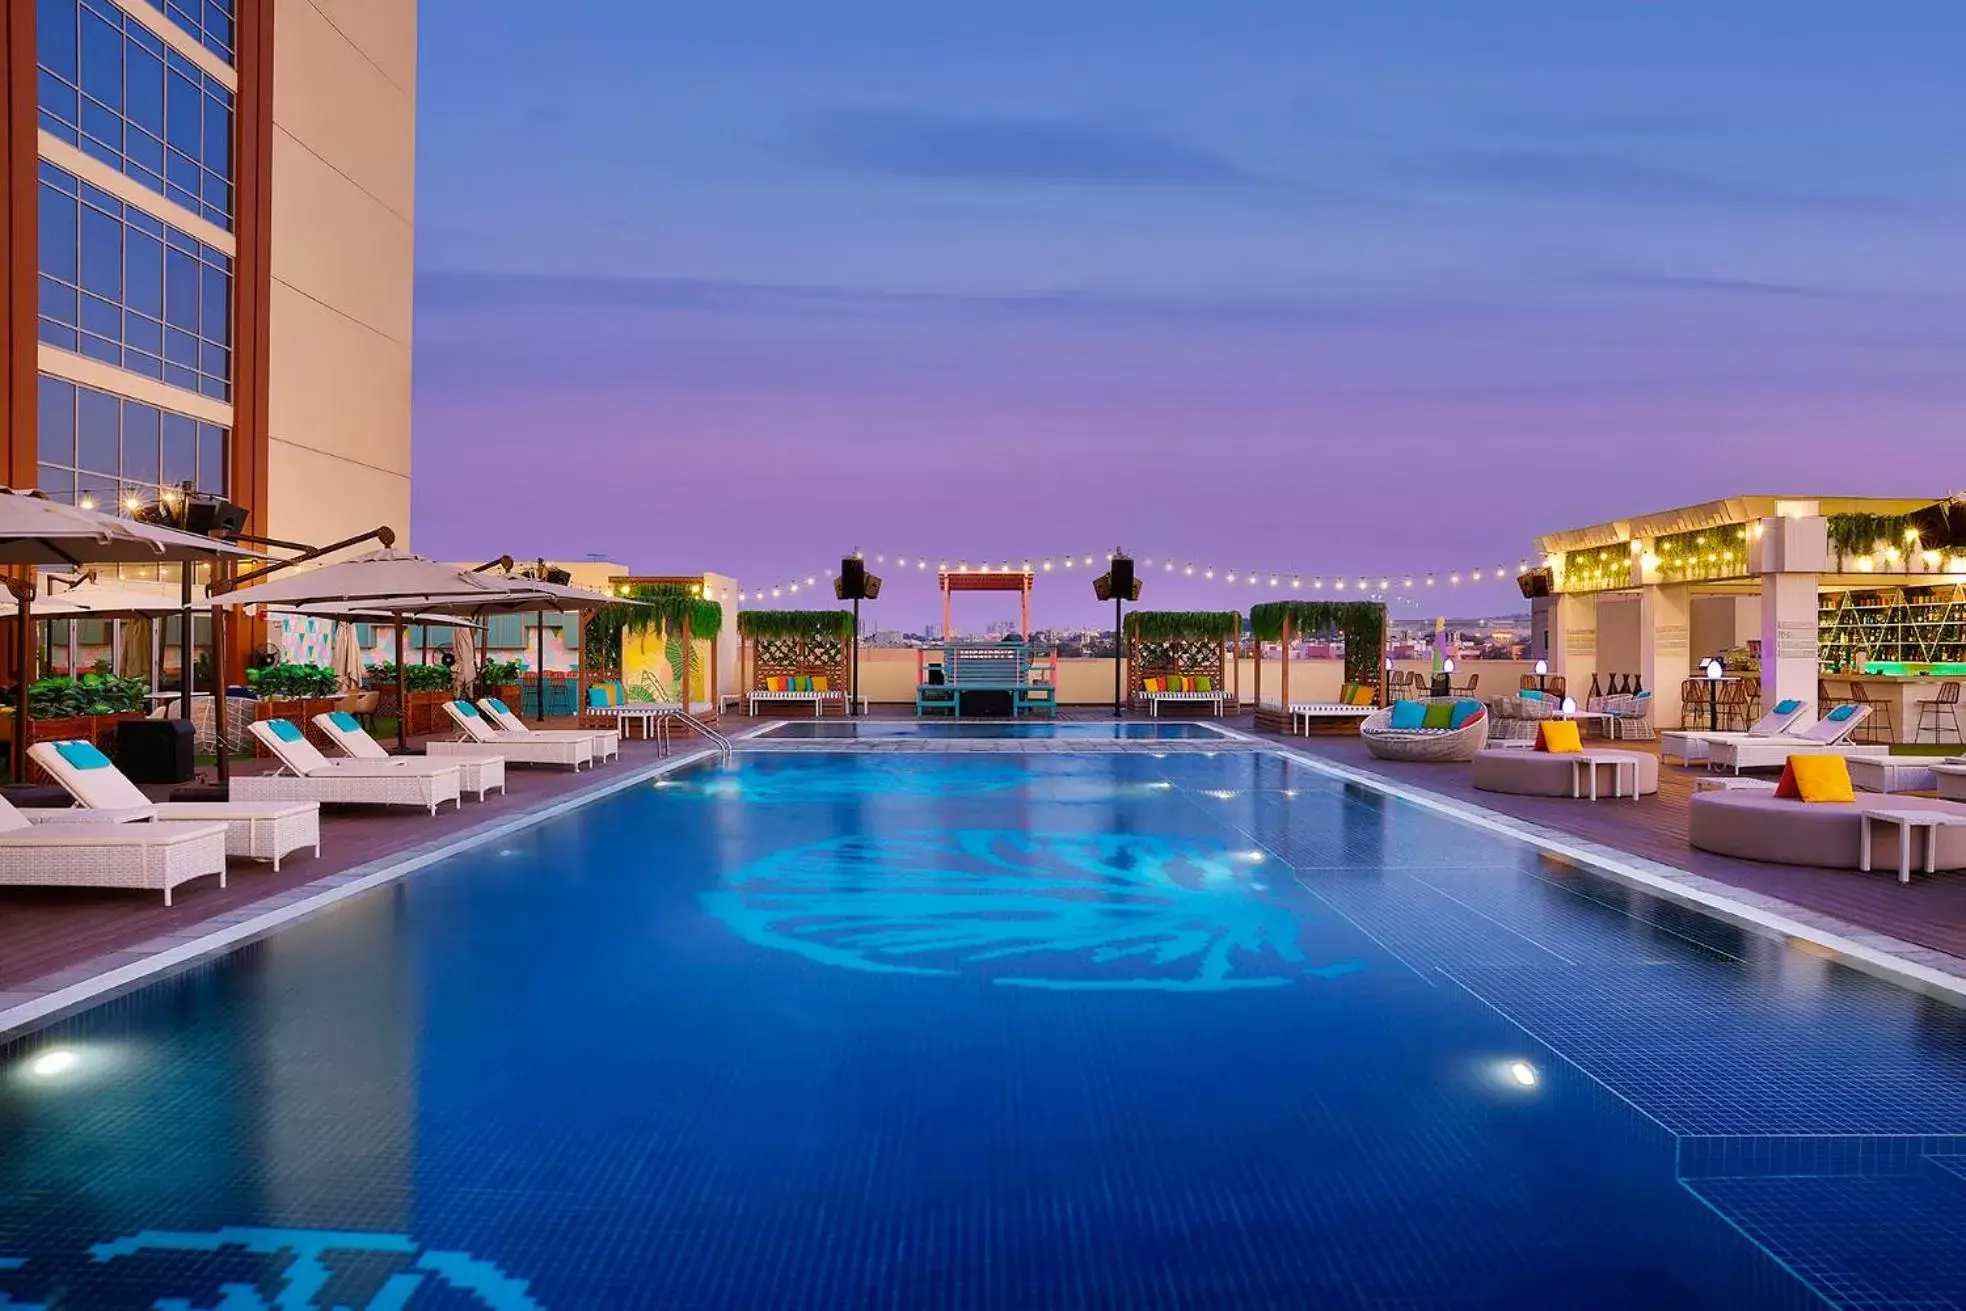 Swimming Pool in Avani Ibn Battuta Dubai Hotel